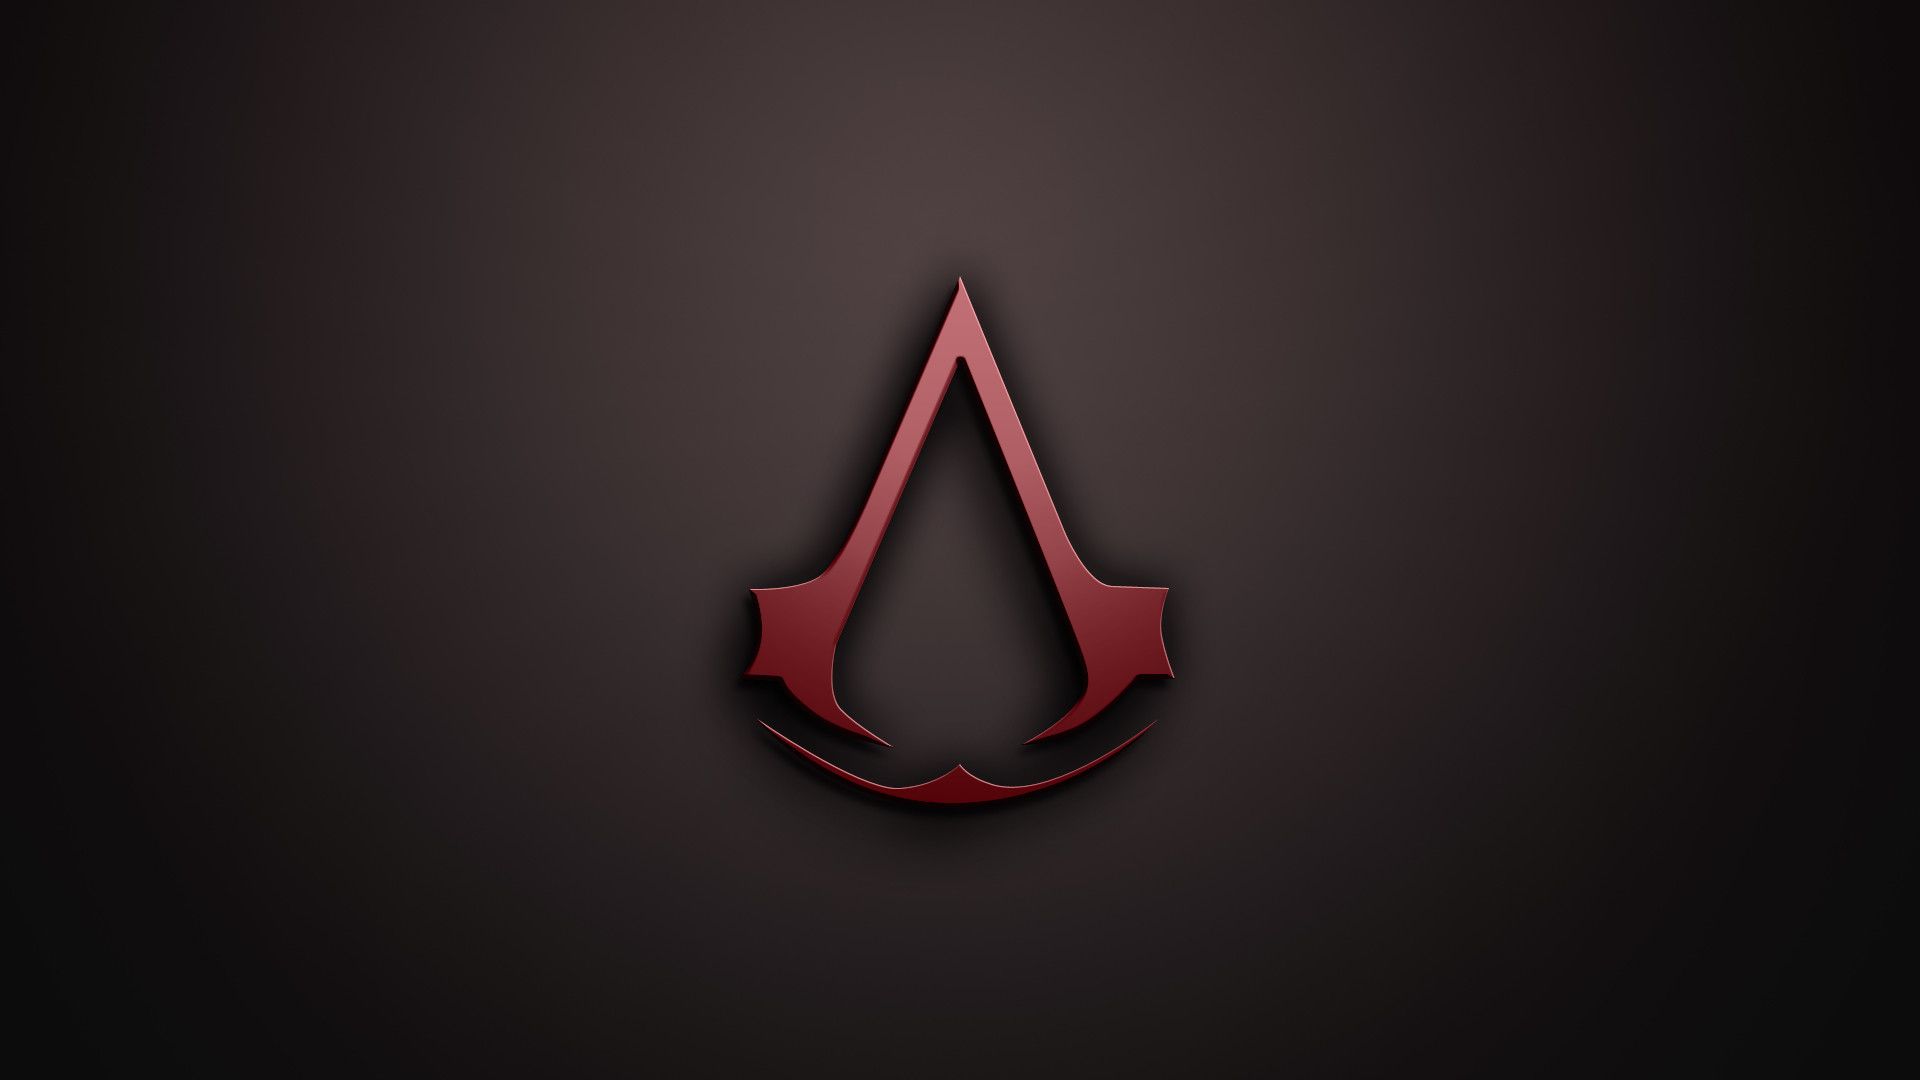 Assassin Symbol Wallpapers   Top Free Assassin Symbol Backgrounds